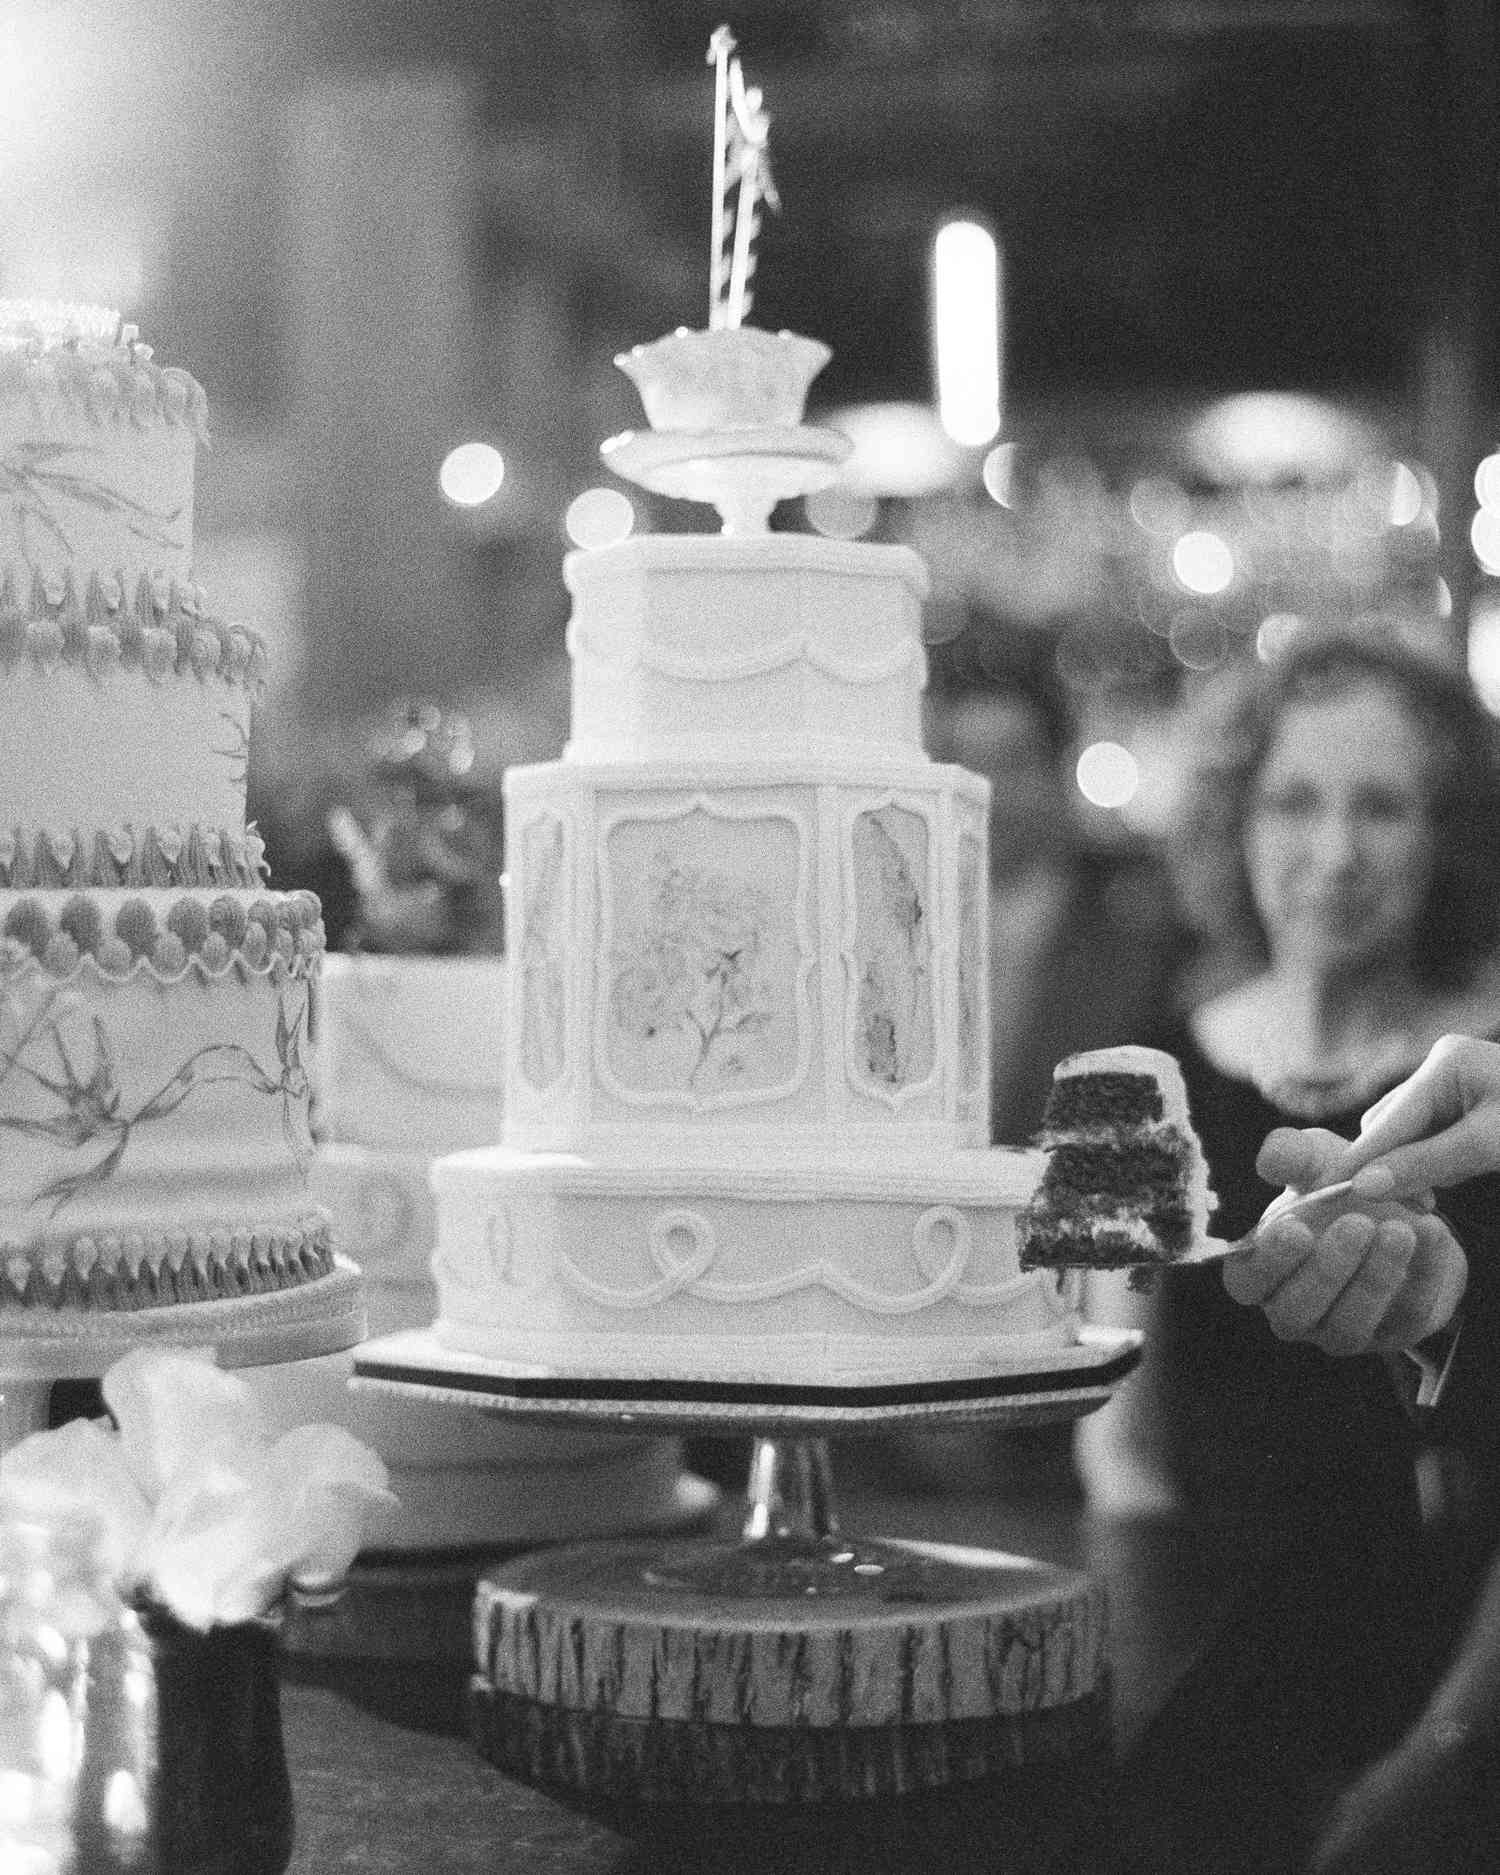 brittany-jeff-wedding-cake-291-s111415-0714.jpg